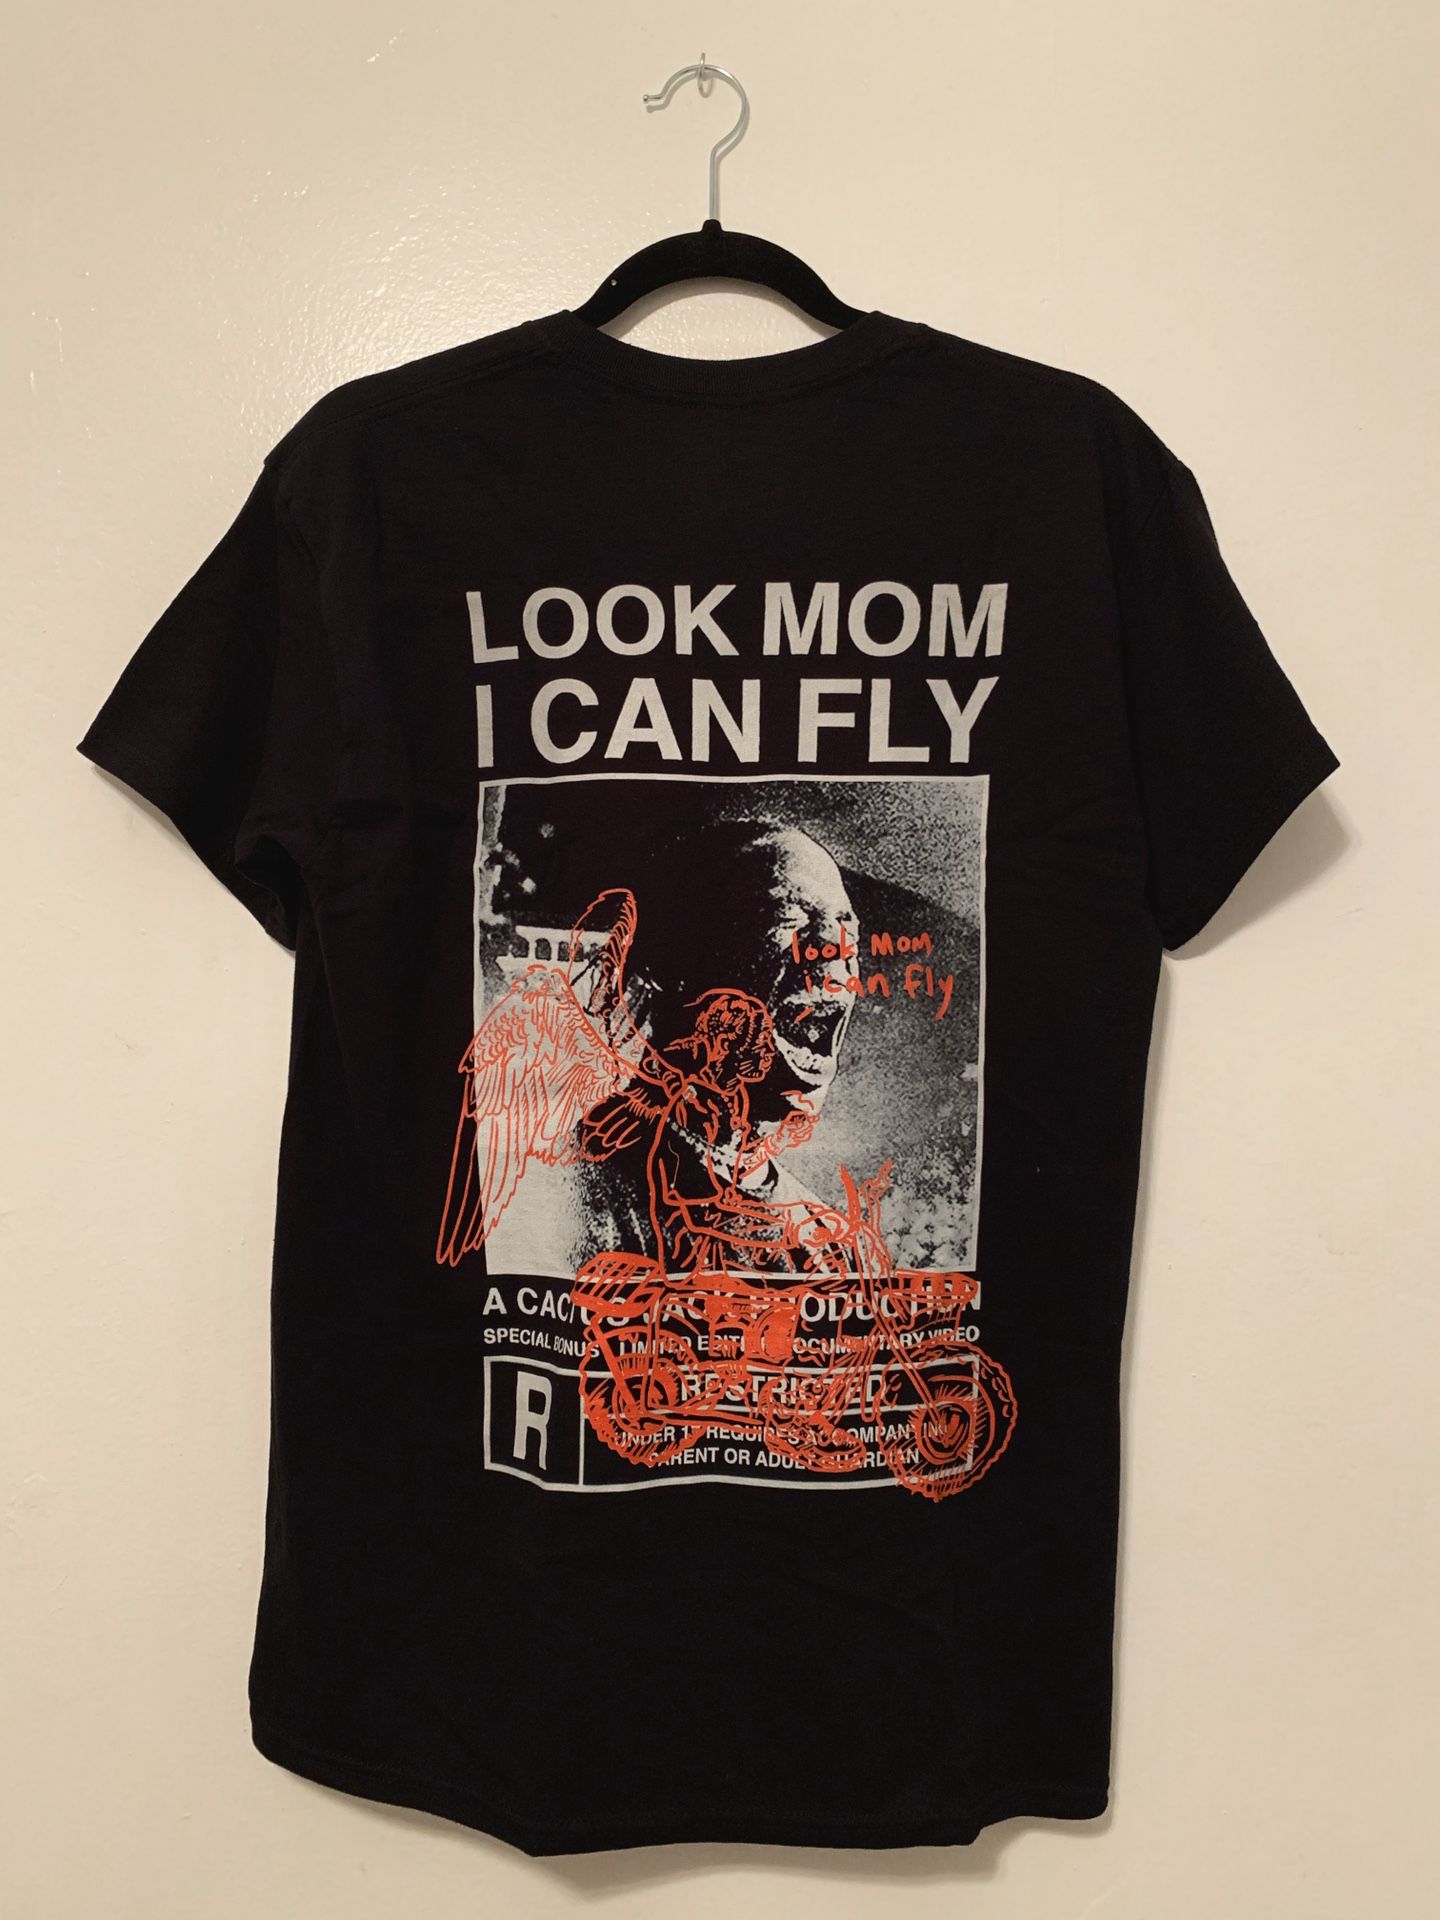 Travis Scott ‘Look mom I can Fly’ tee